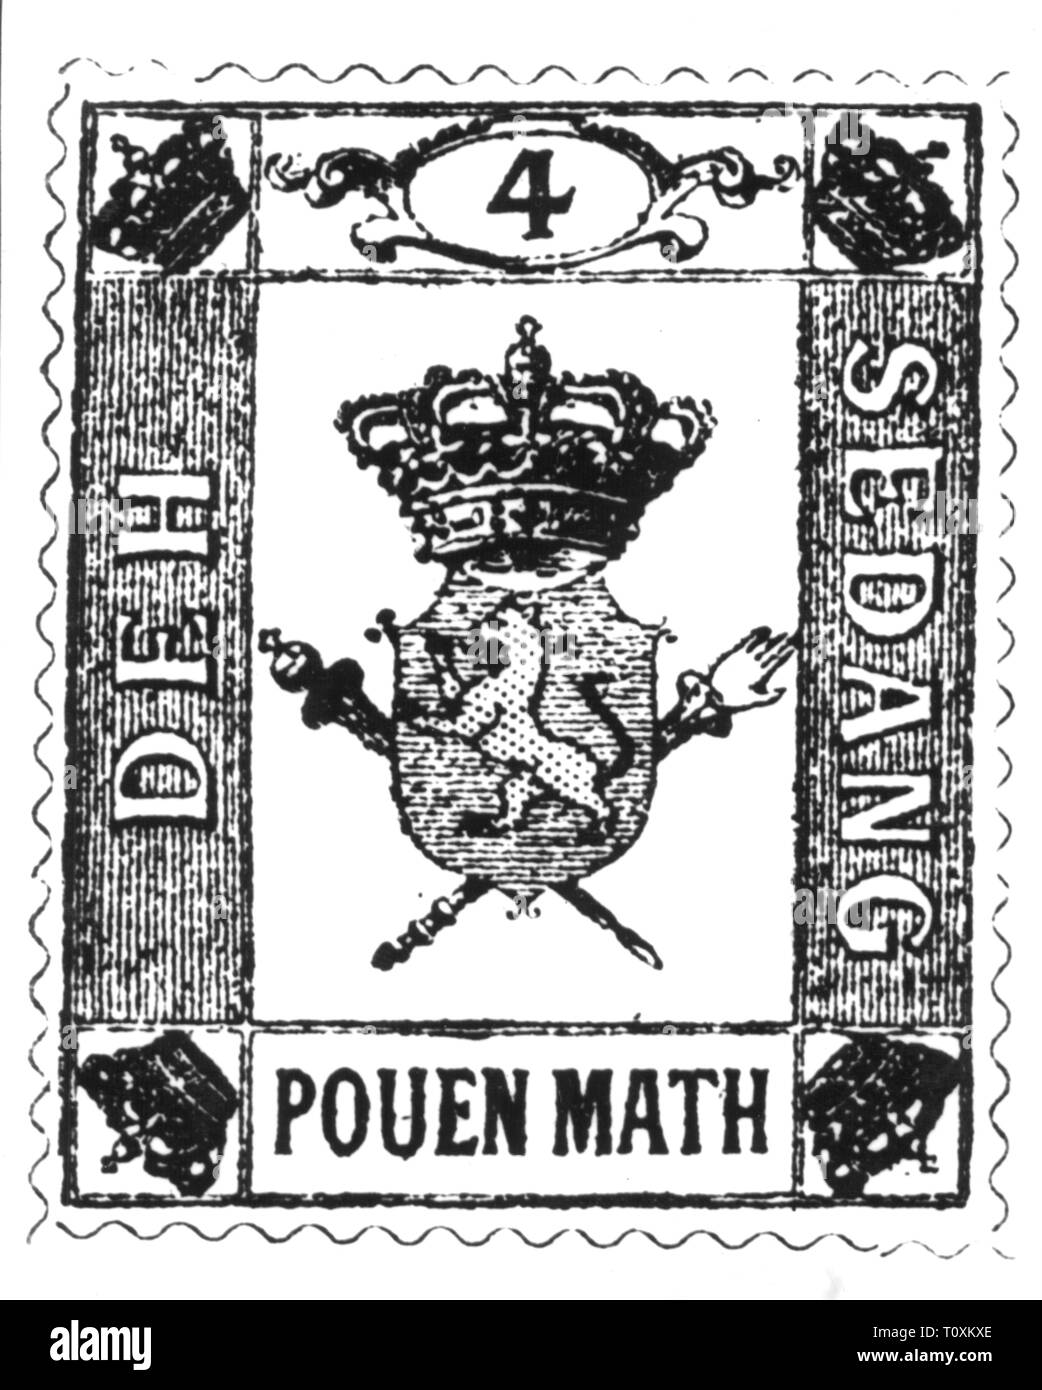 Mail, Briefmarken, Vietnam, 4 Mathe Briefmarke, Königreich Sedang, 1888, Additional-Rights - Clearance-Info - Not-Available Stockfoto